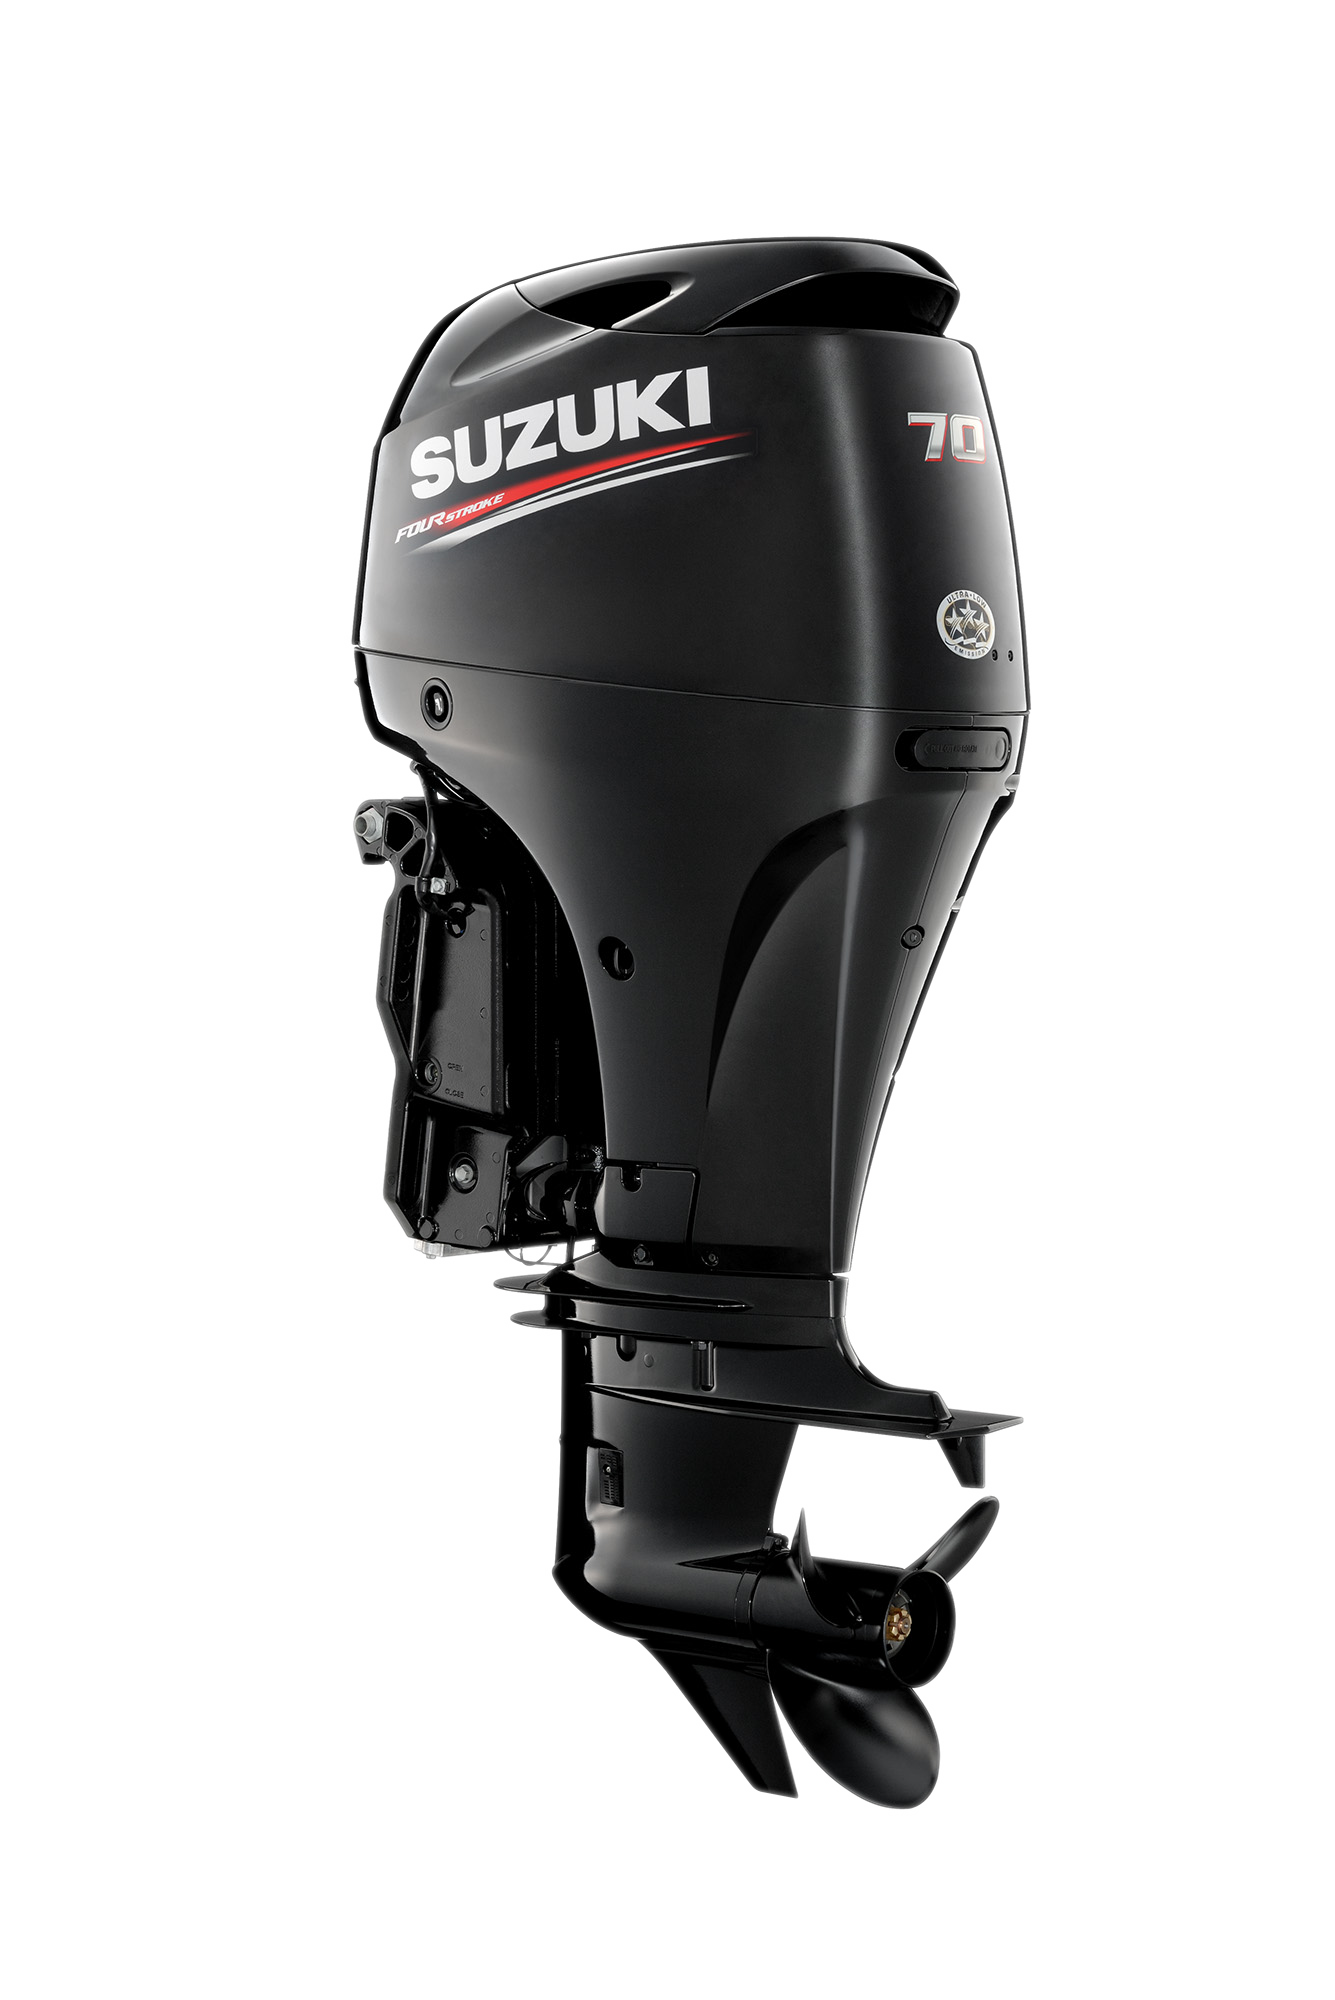 Small Suzuki Outboard Motors Gulf Coast Suzuki Products